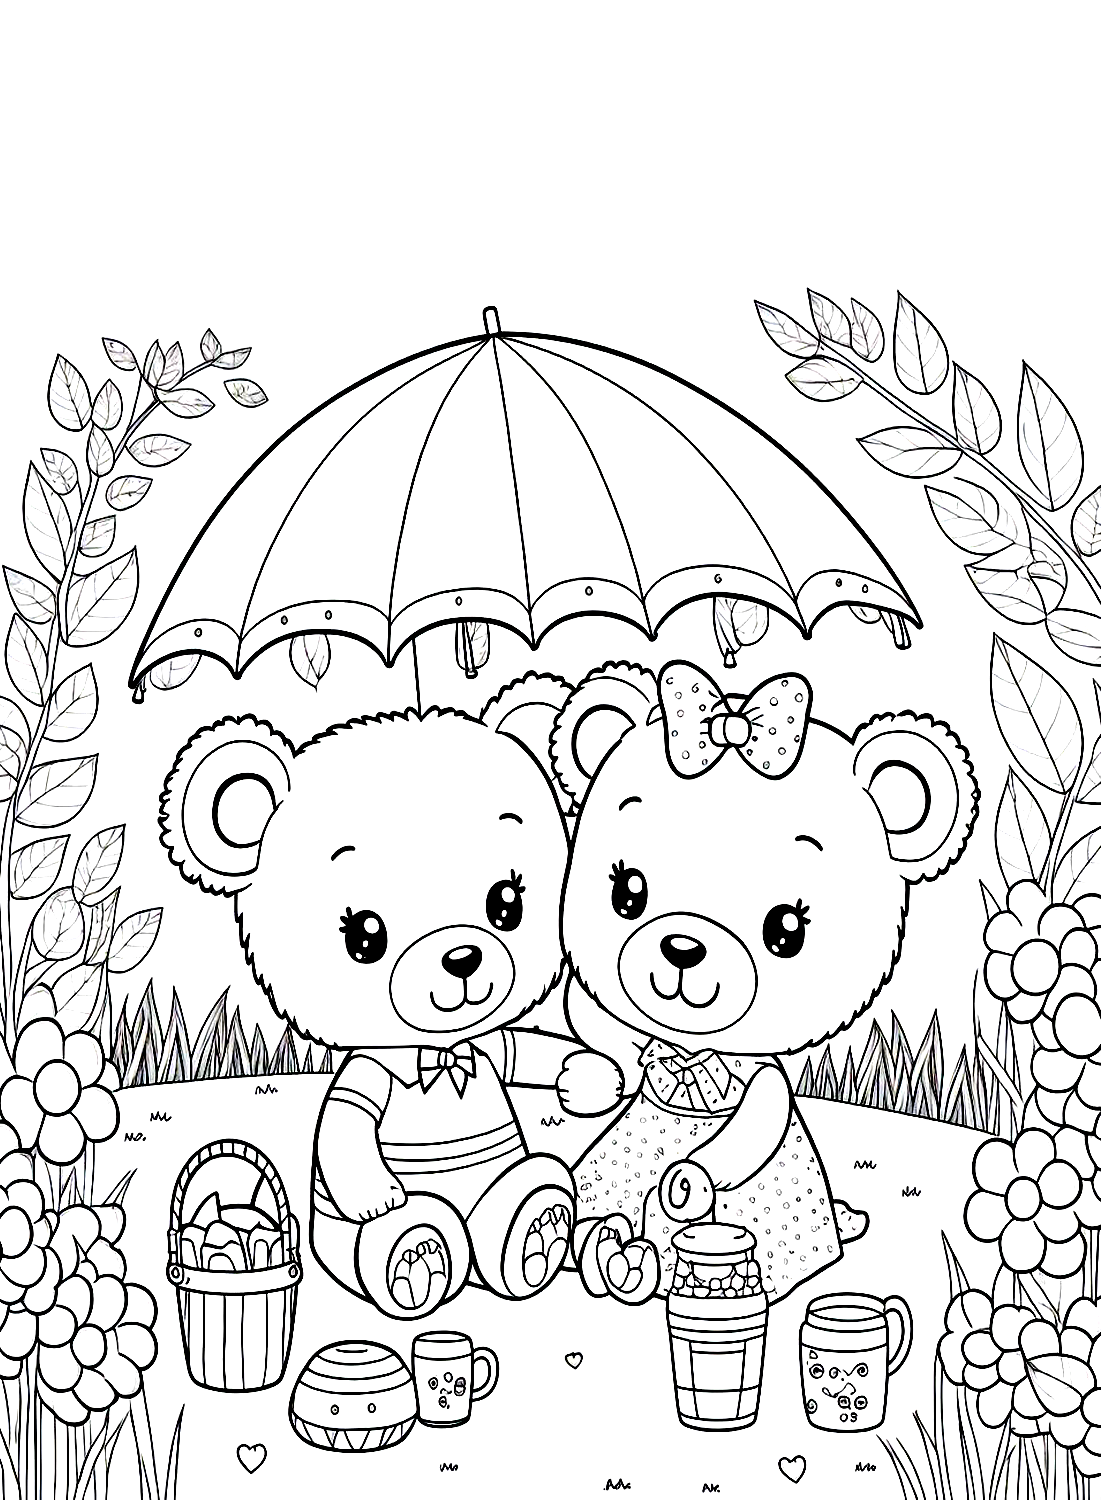 Teddy bear color page